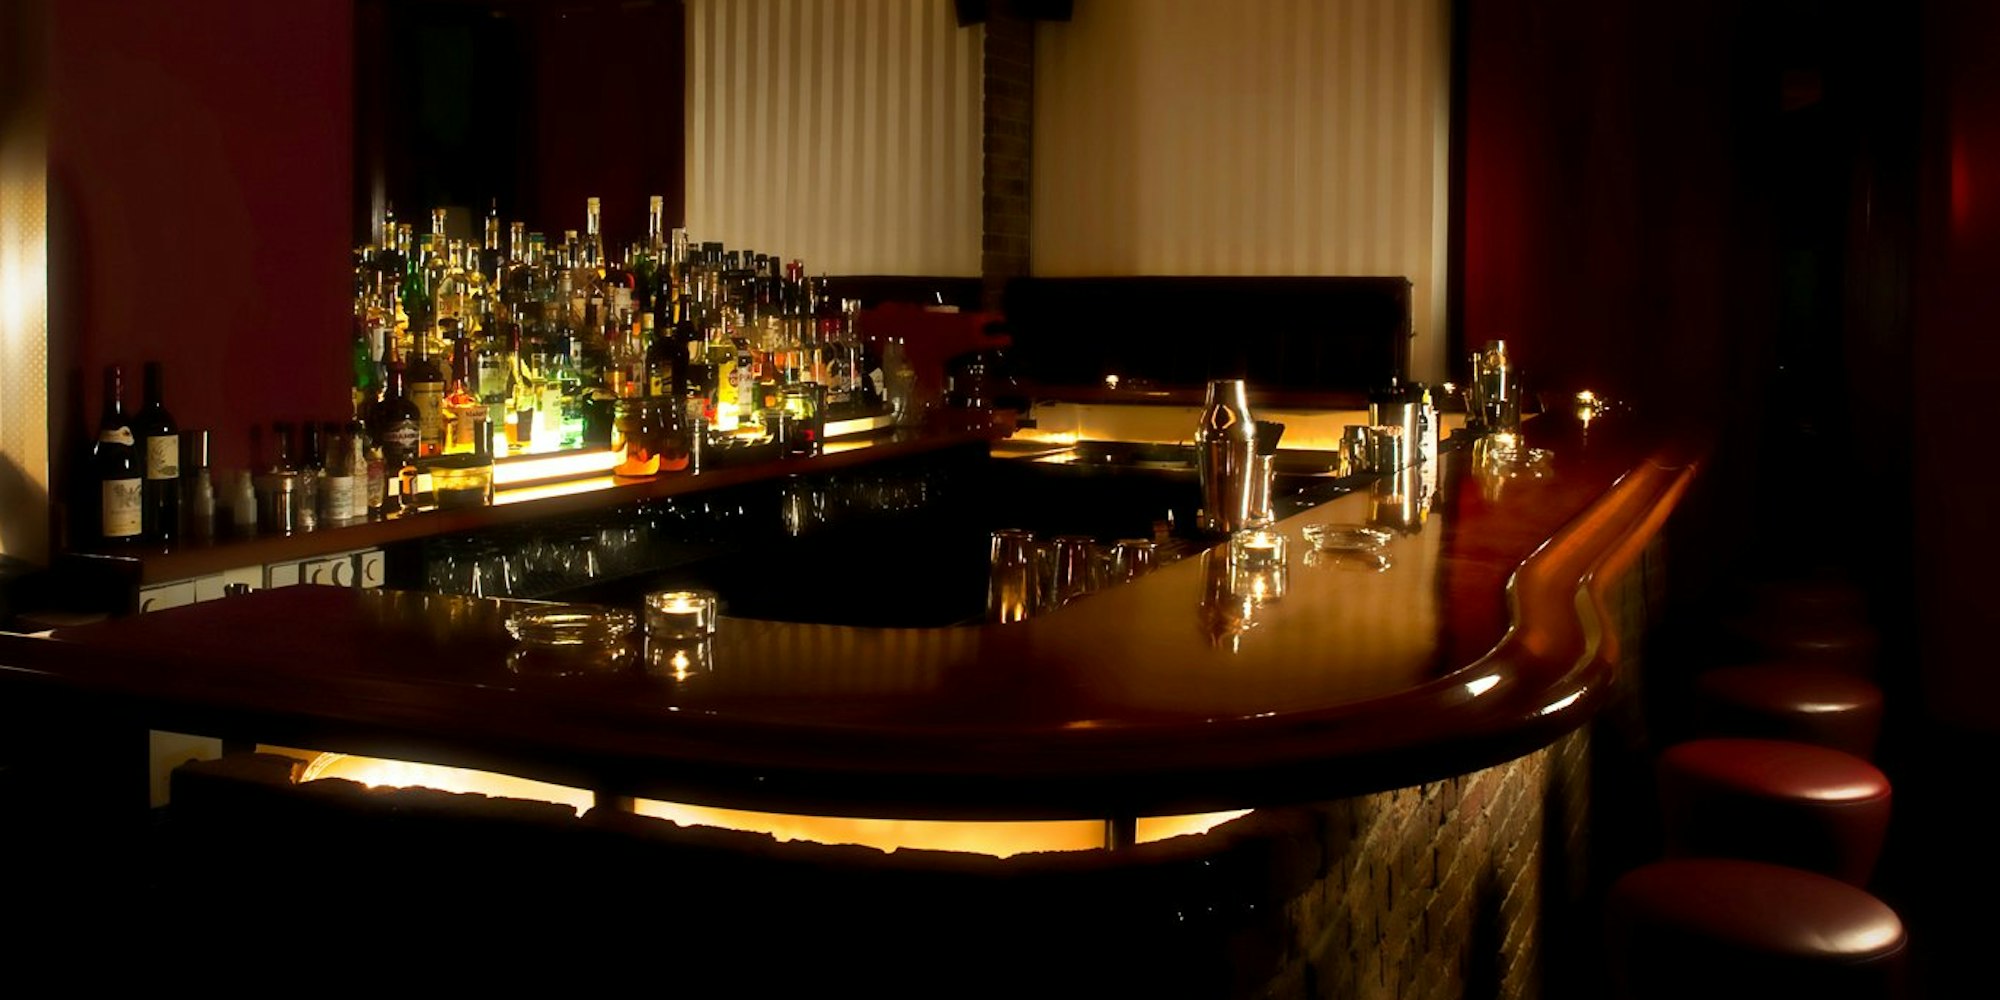 Blick in die Kölner Bar "Spirits" - die beste Bar der Republik.